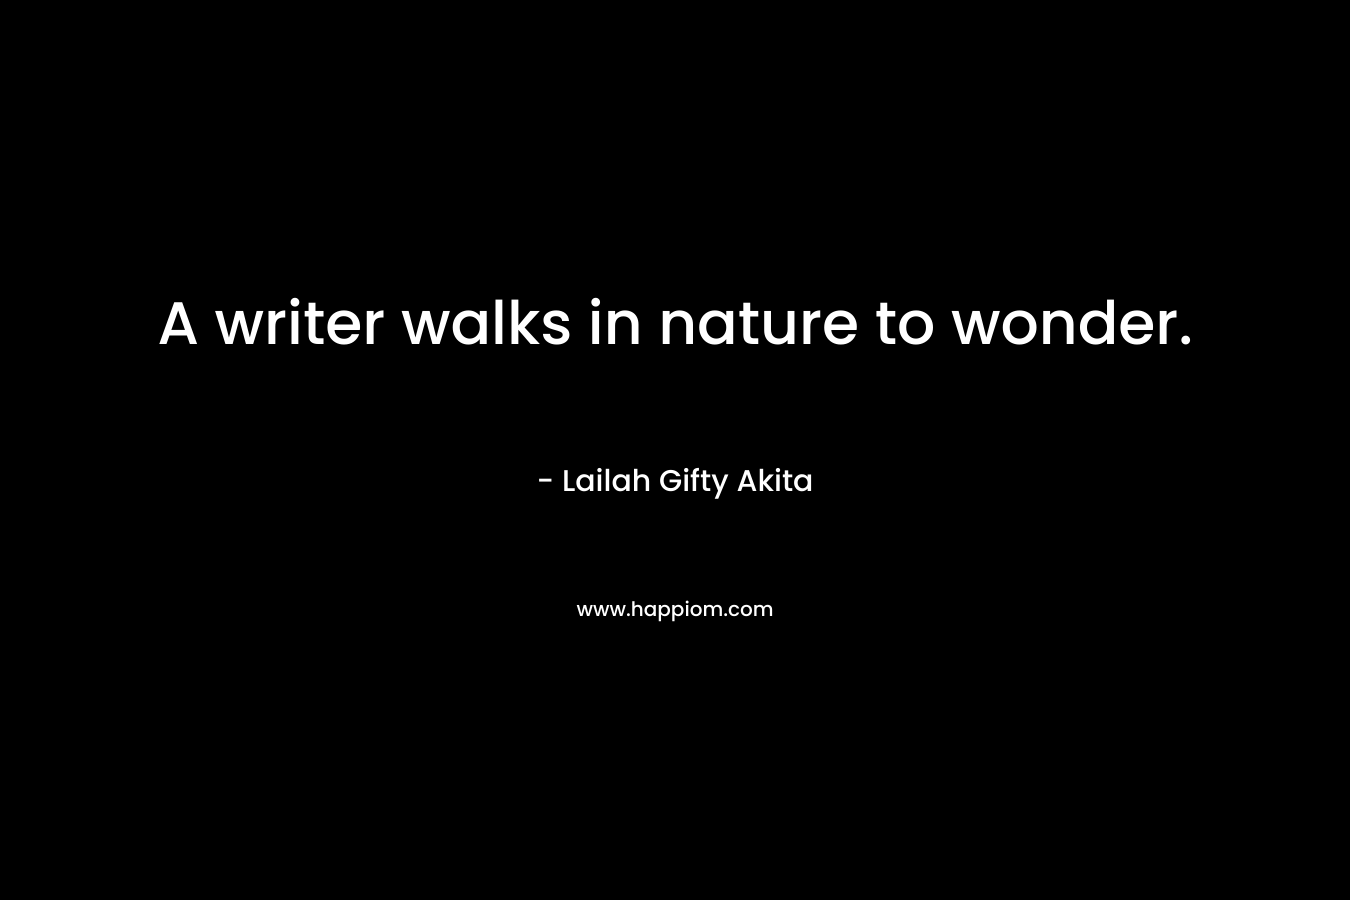 A writer walks in nature to wonder.